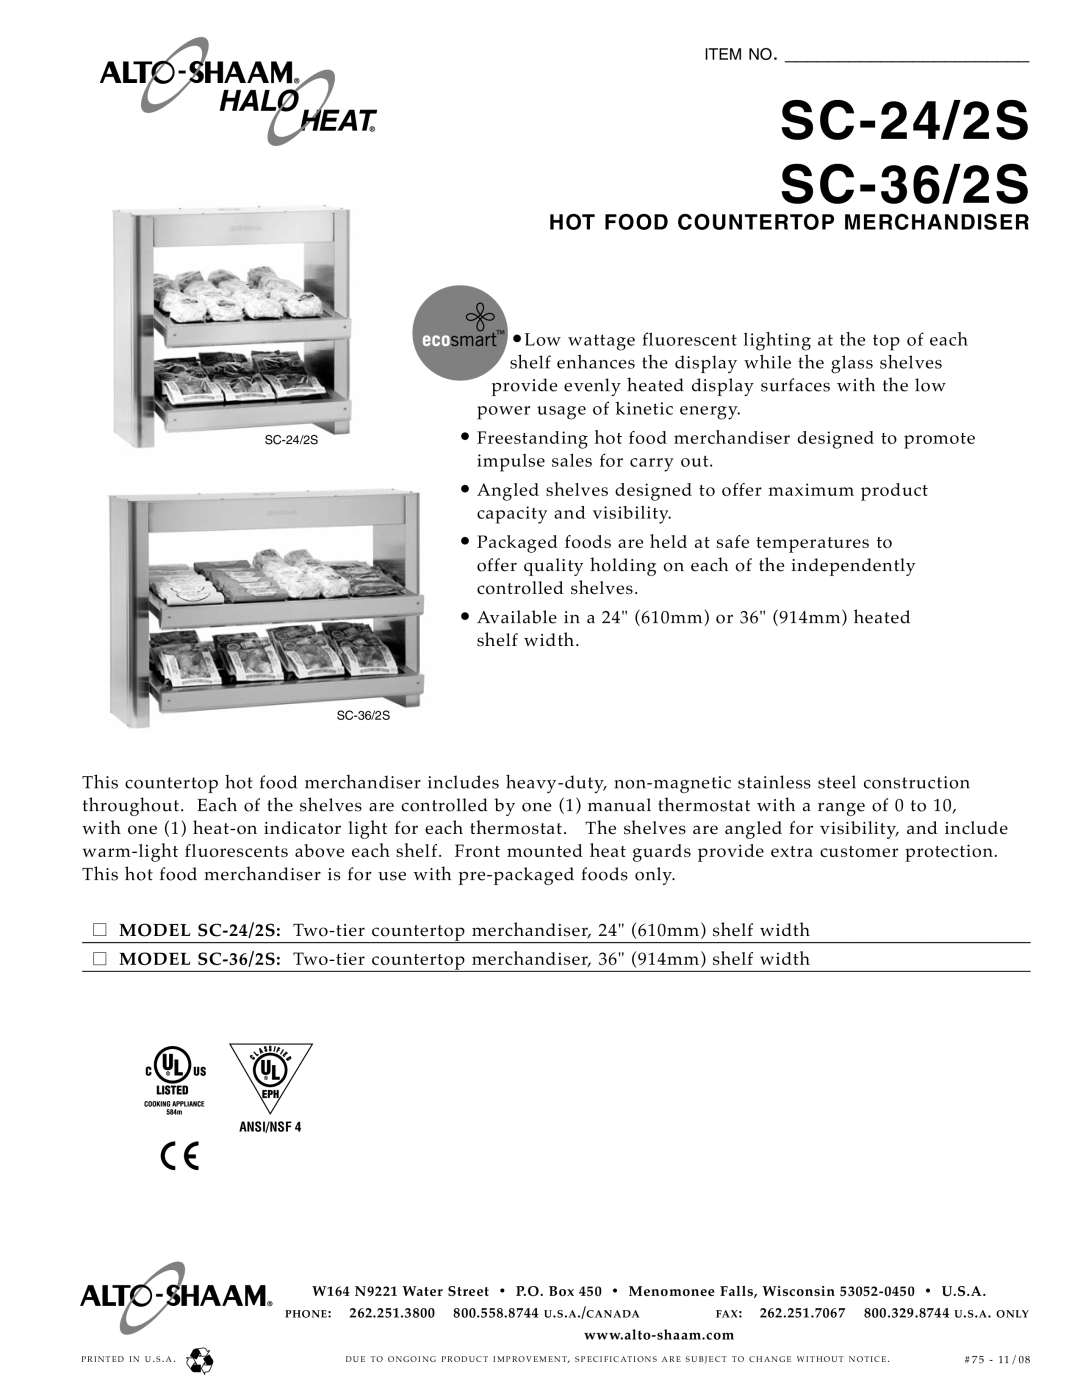 Alto-Shaam specifications SC-24/2S SC-36/2S, Item No, Hot Food Countertop Merchandiser 